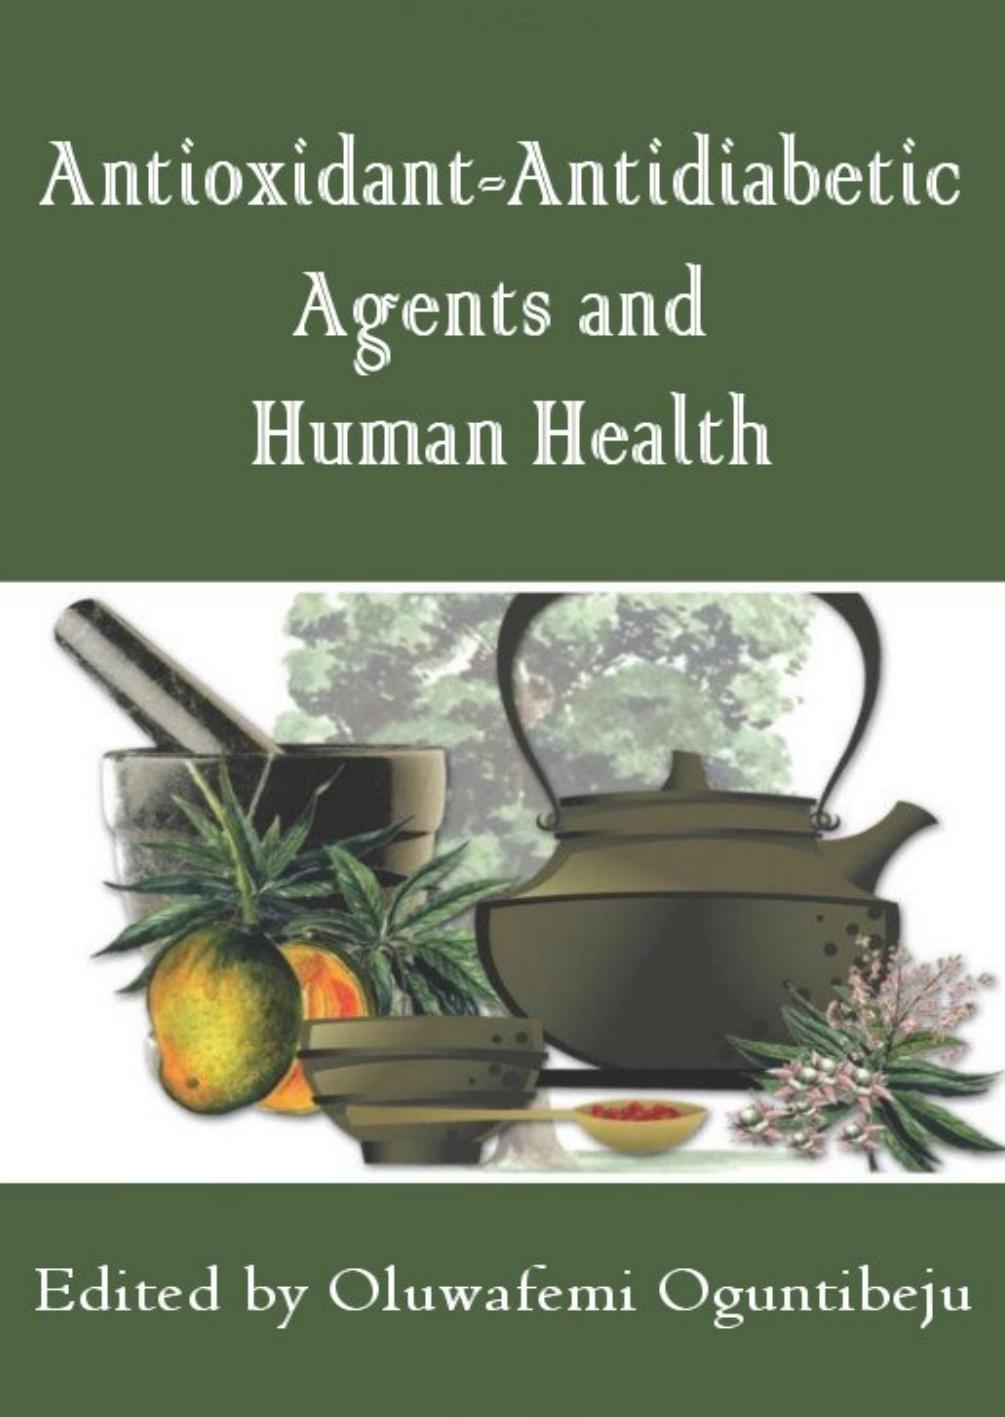 Antioxidant-Antidiabetic Agents and Human Health 2016